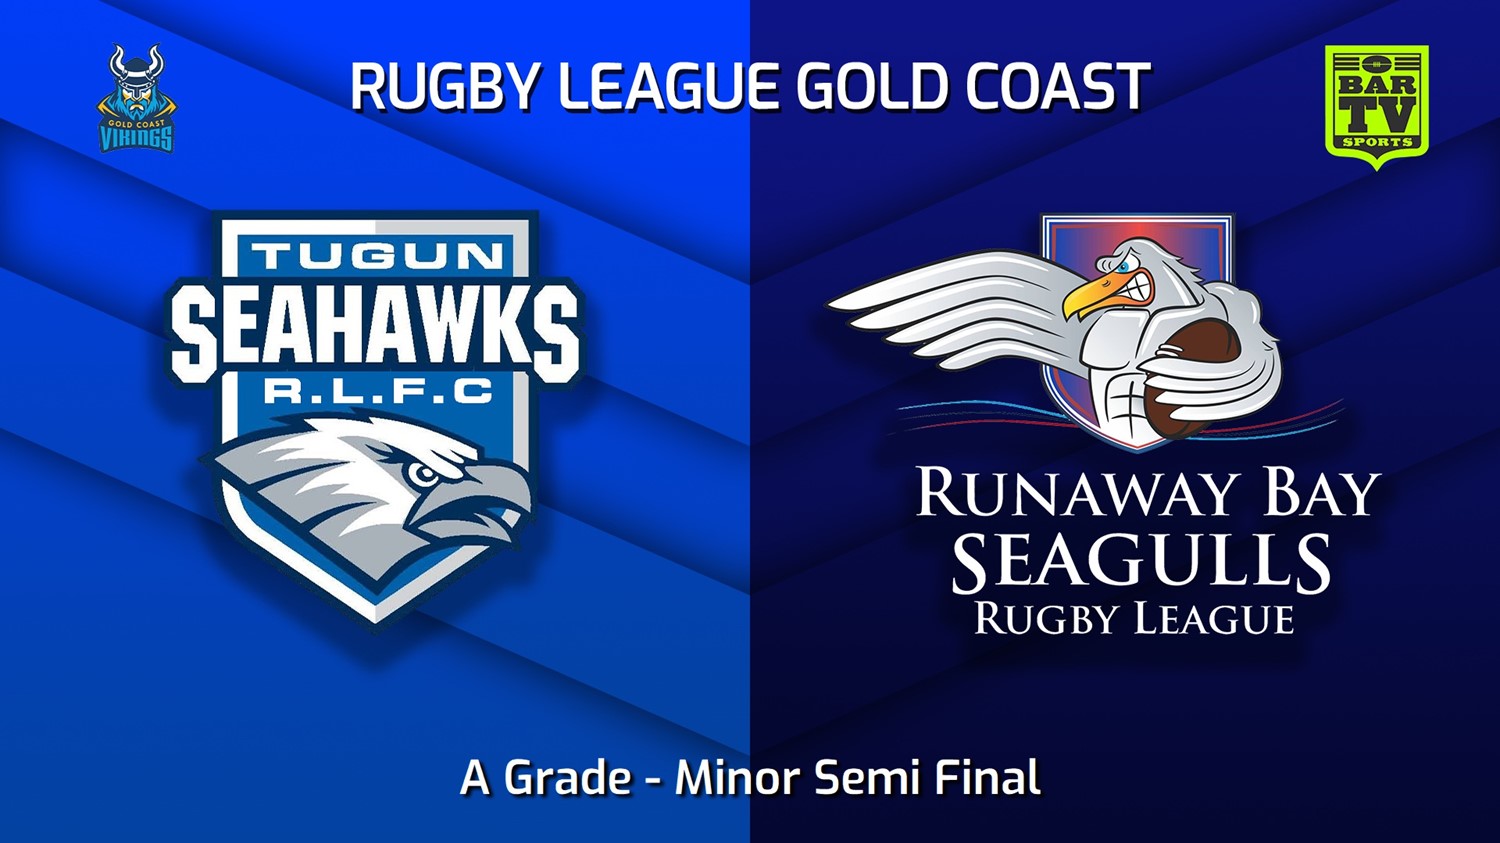 230819-Gold Coast Minor Semi Final - A Grade - Tugun Seahawks v Runaway Bay Seagulls Slate Image